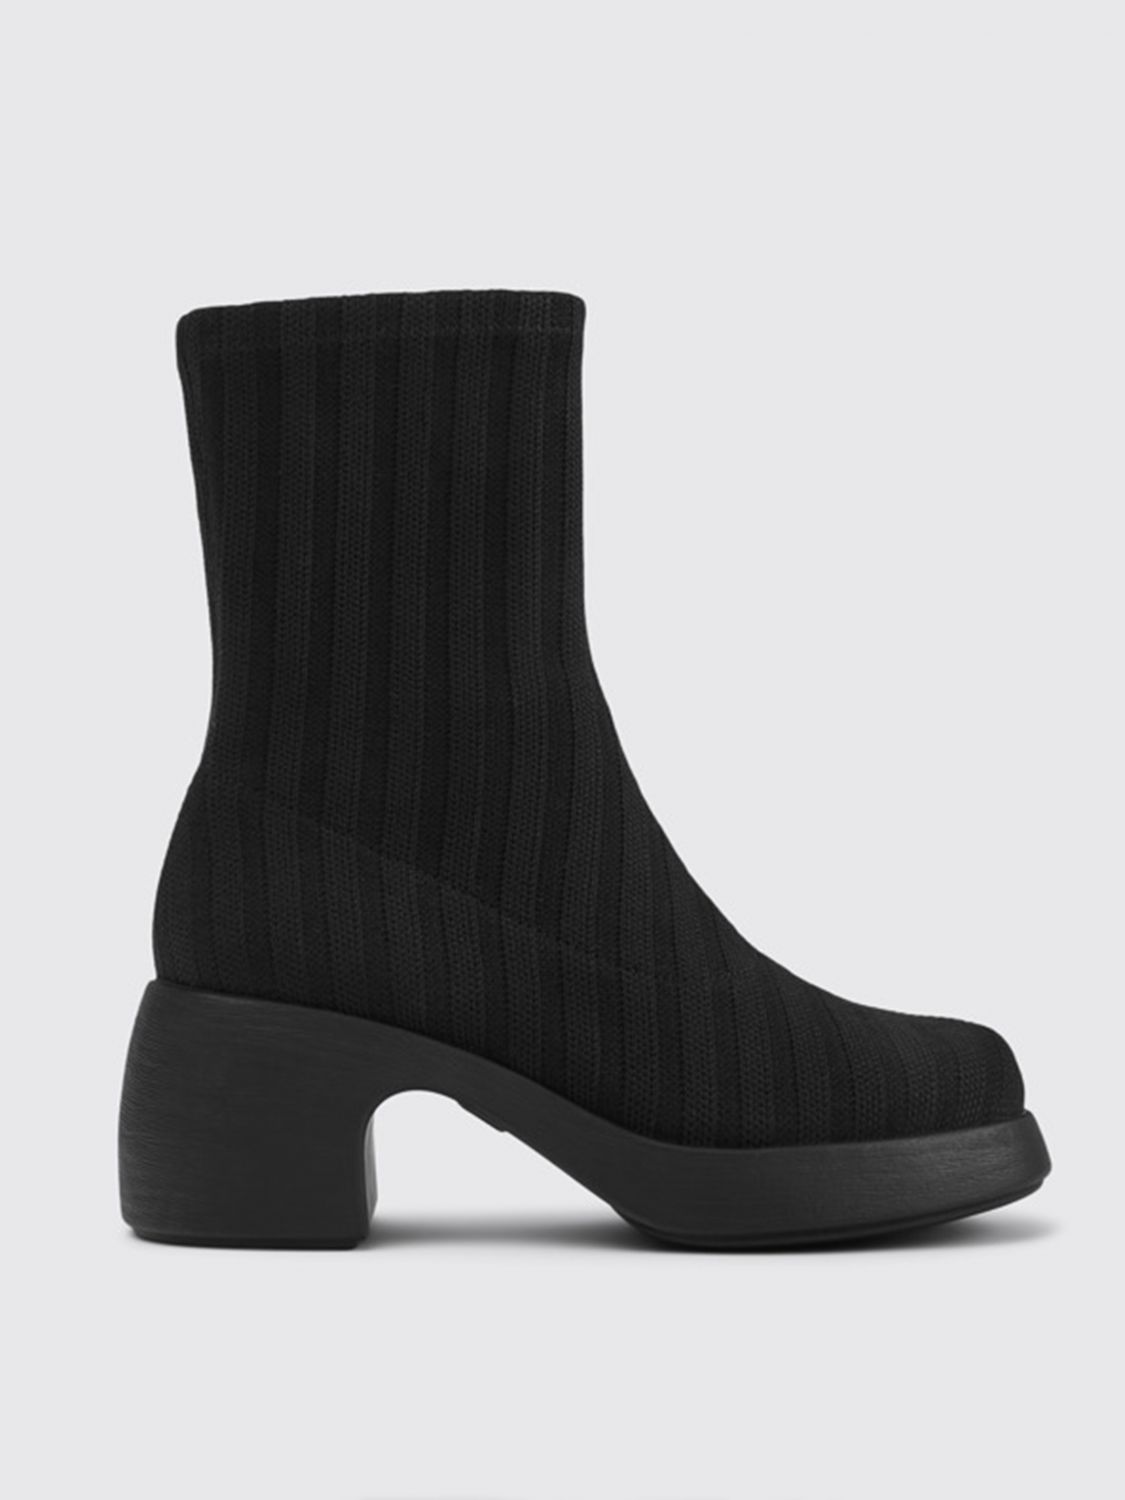 estas Buscar gemelo CAMPER: flat ankle boots for woman - Black | Camper flat ankle boots  K400684-001 THELMA online on GIGLIO.COM